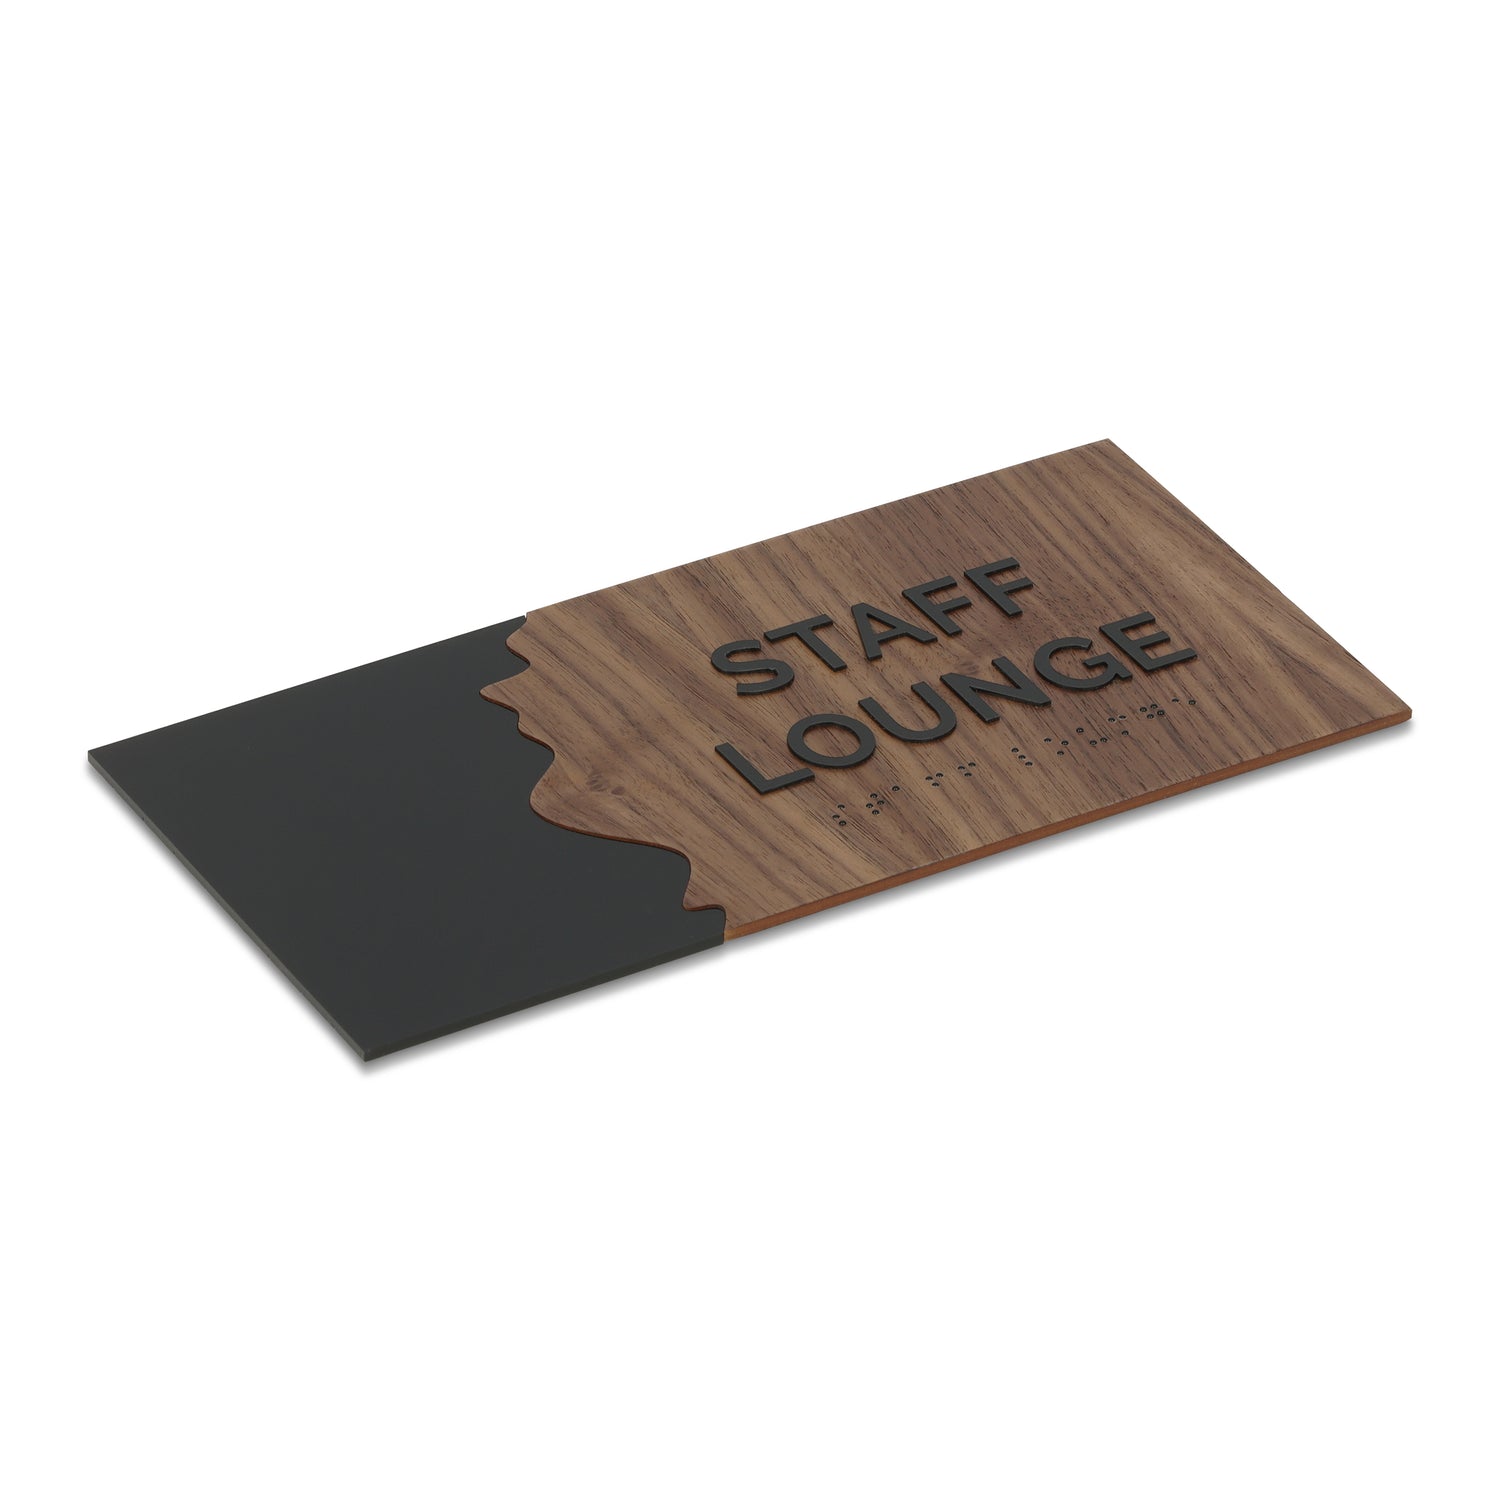 Acrylic and Wood Staff Lounge Sign